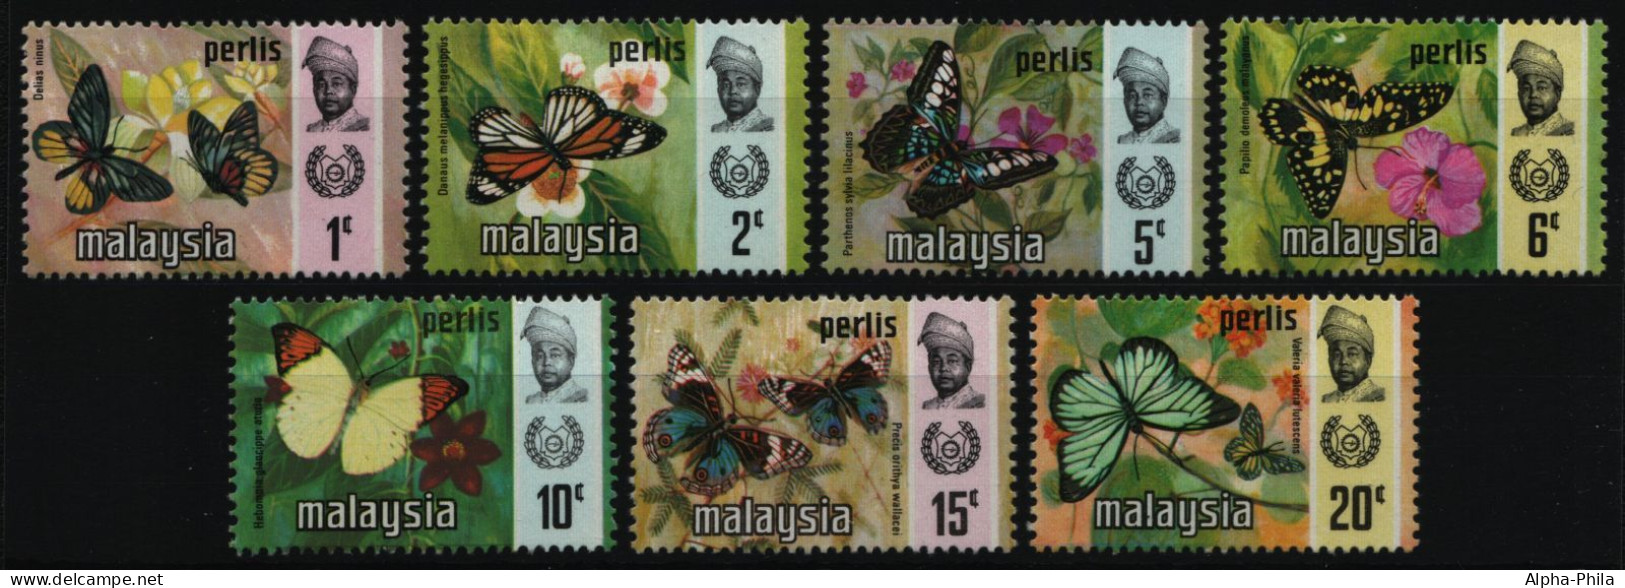 Malaya - Perlis 1971 - Mi-Nr. 47-53 I ** - MNH - Schmetterlinge / Butterflies - Perlis